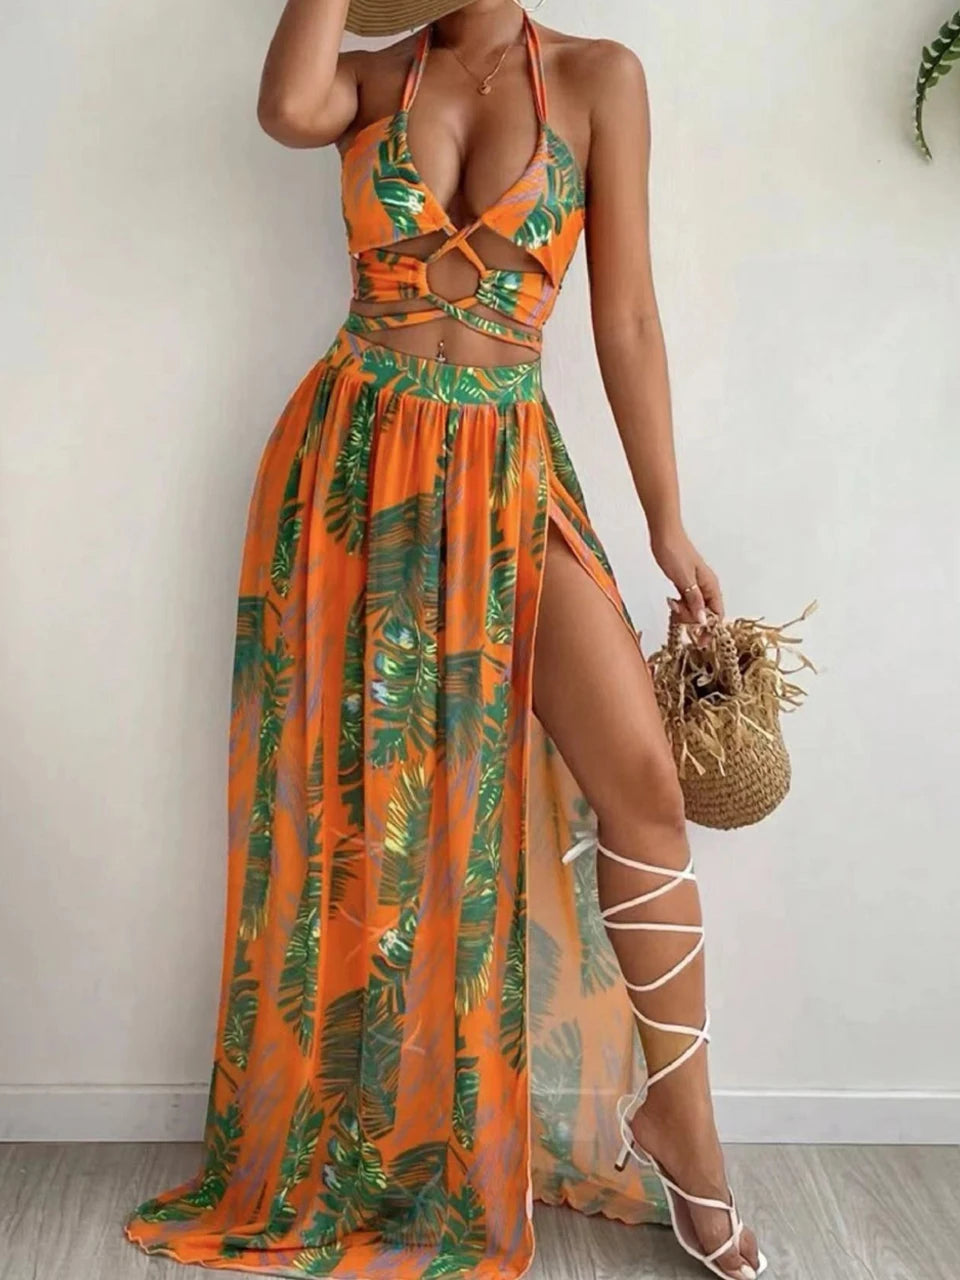 Bahamas Vacation 3 Piece Cover Up Skirt Set  Sunset and Swim Orange L 